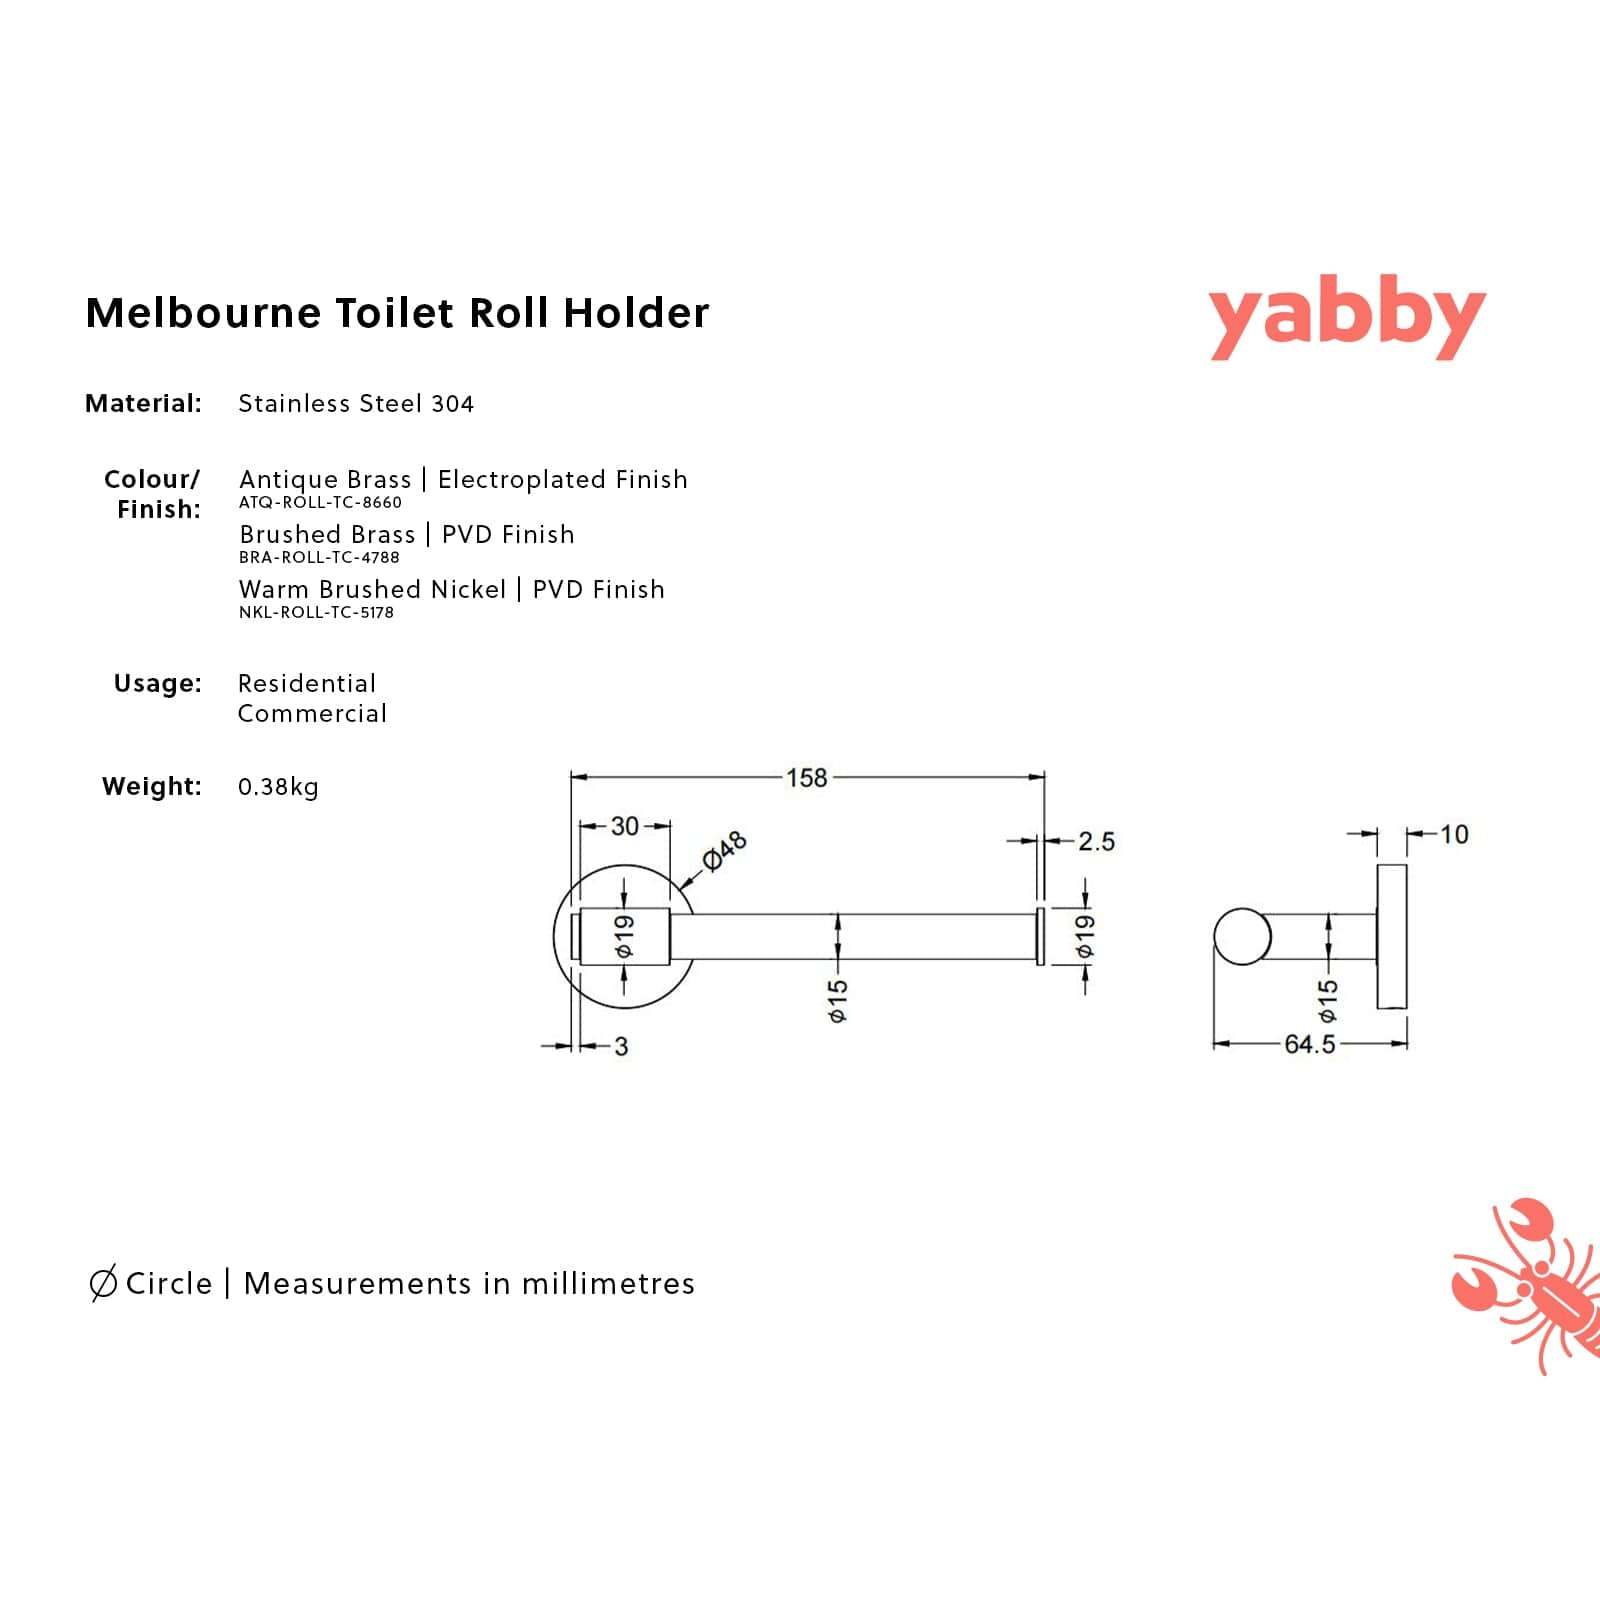 TileCloud TAPWARE Melbourne Toilet Roll Holder Warm Brushed Nickel